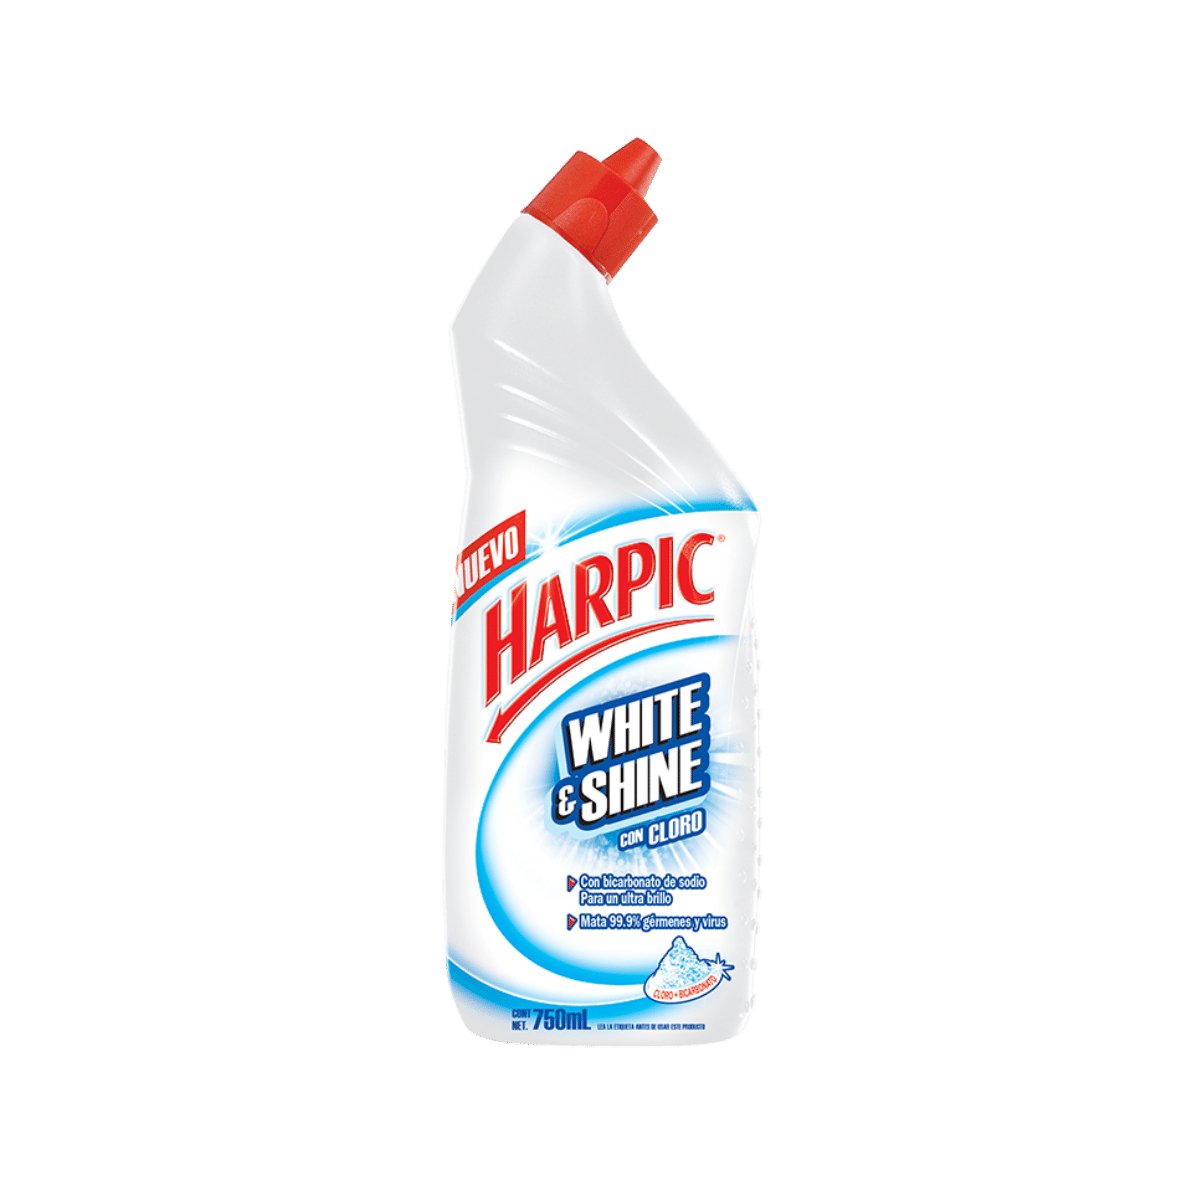 Harpic® White & Shine con Cloro, 750ml - Karlan ¡Marca la Limpieza!RB-3095803